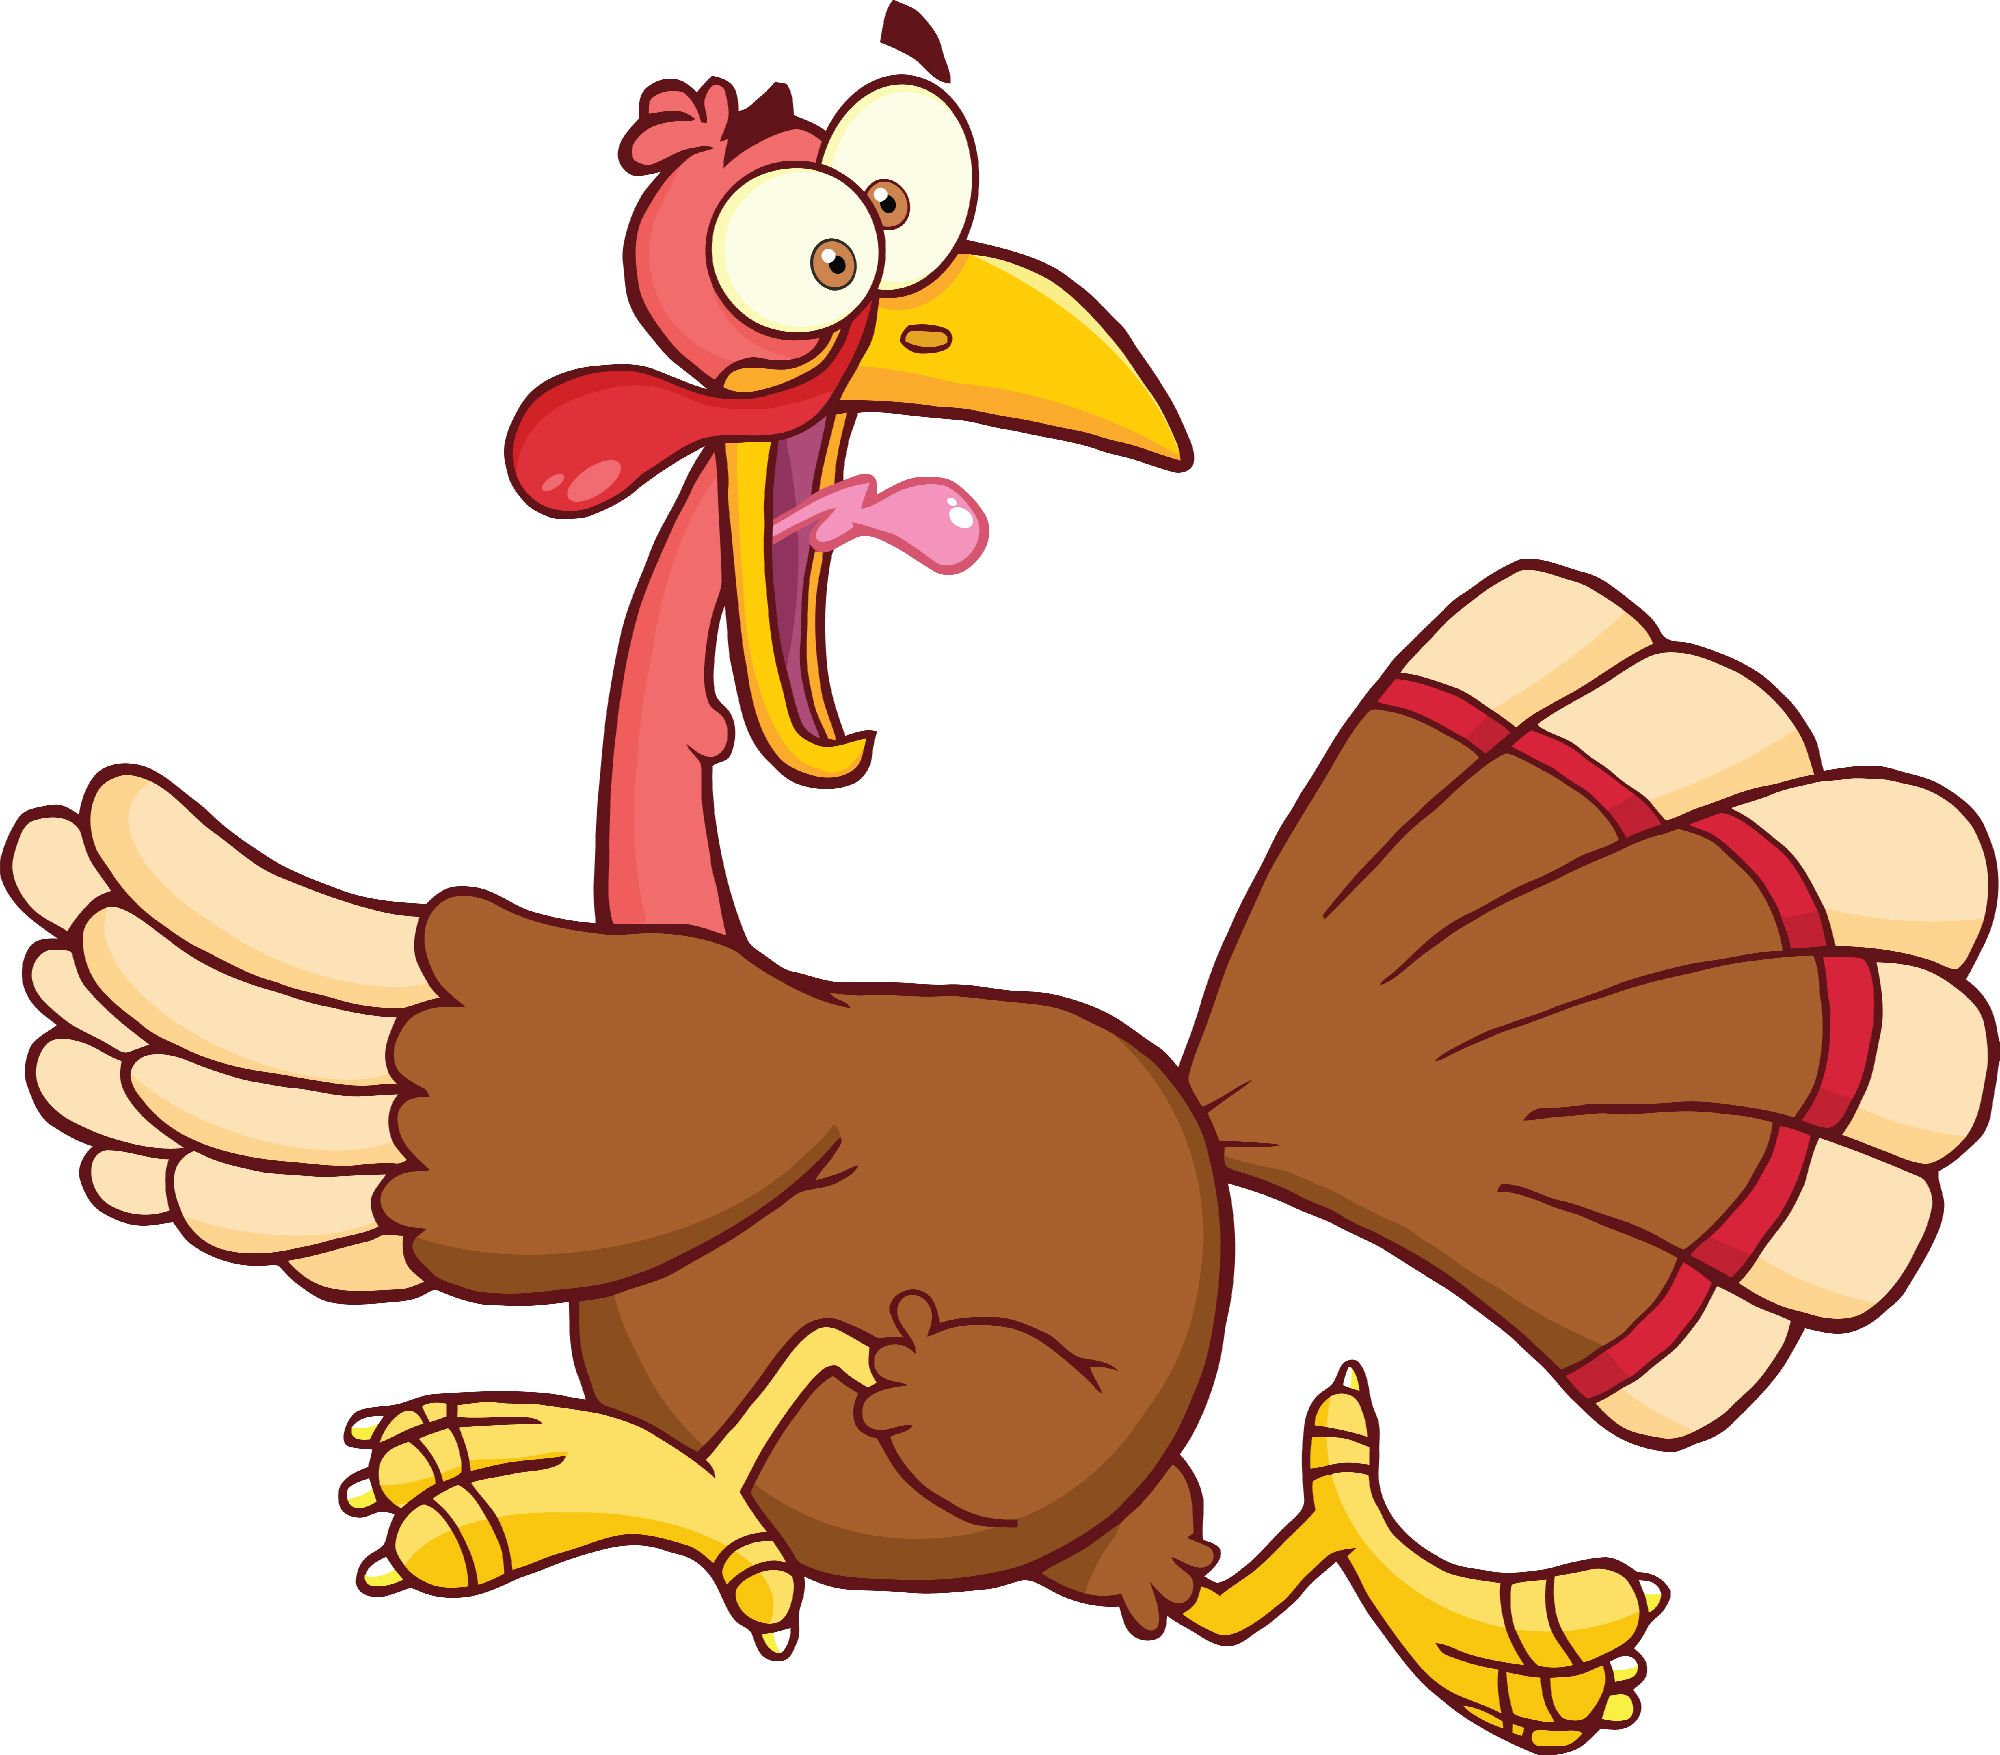 Thanksgiving turkey cartoons ideas. turkey cartoon, thanksgiving turkey, thanksgiving